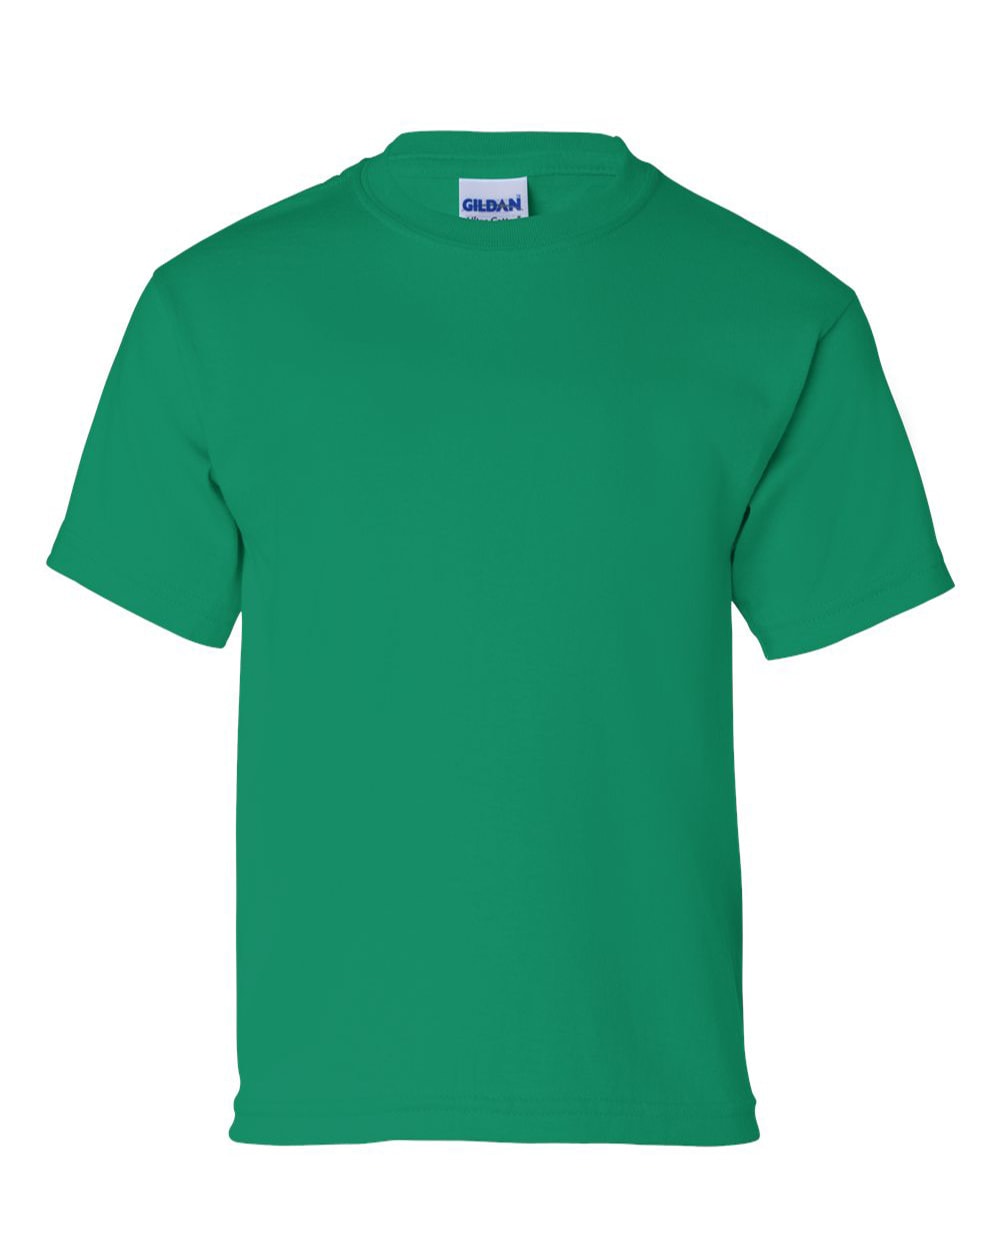 New Blank Gildan Ultra Cotton Youth Royal Blue T-shirts Pack of 2 